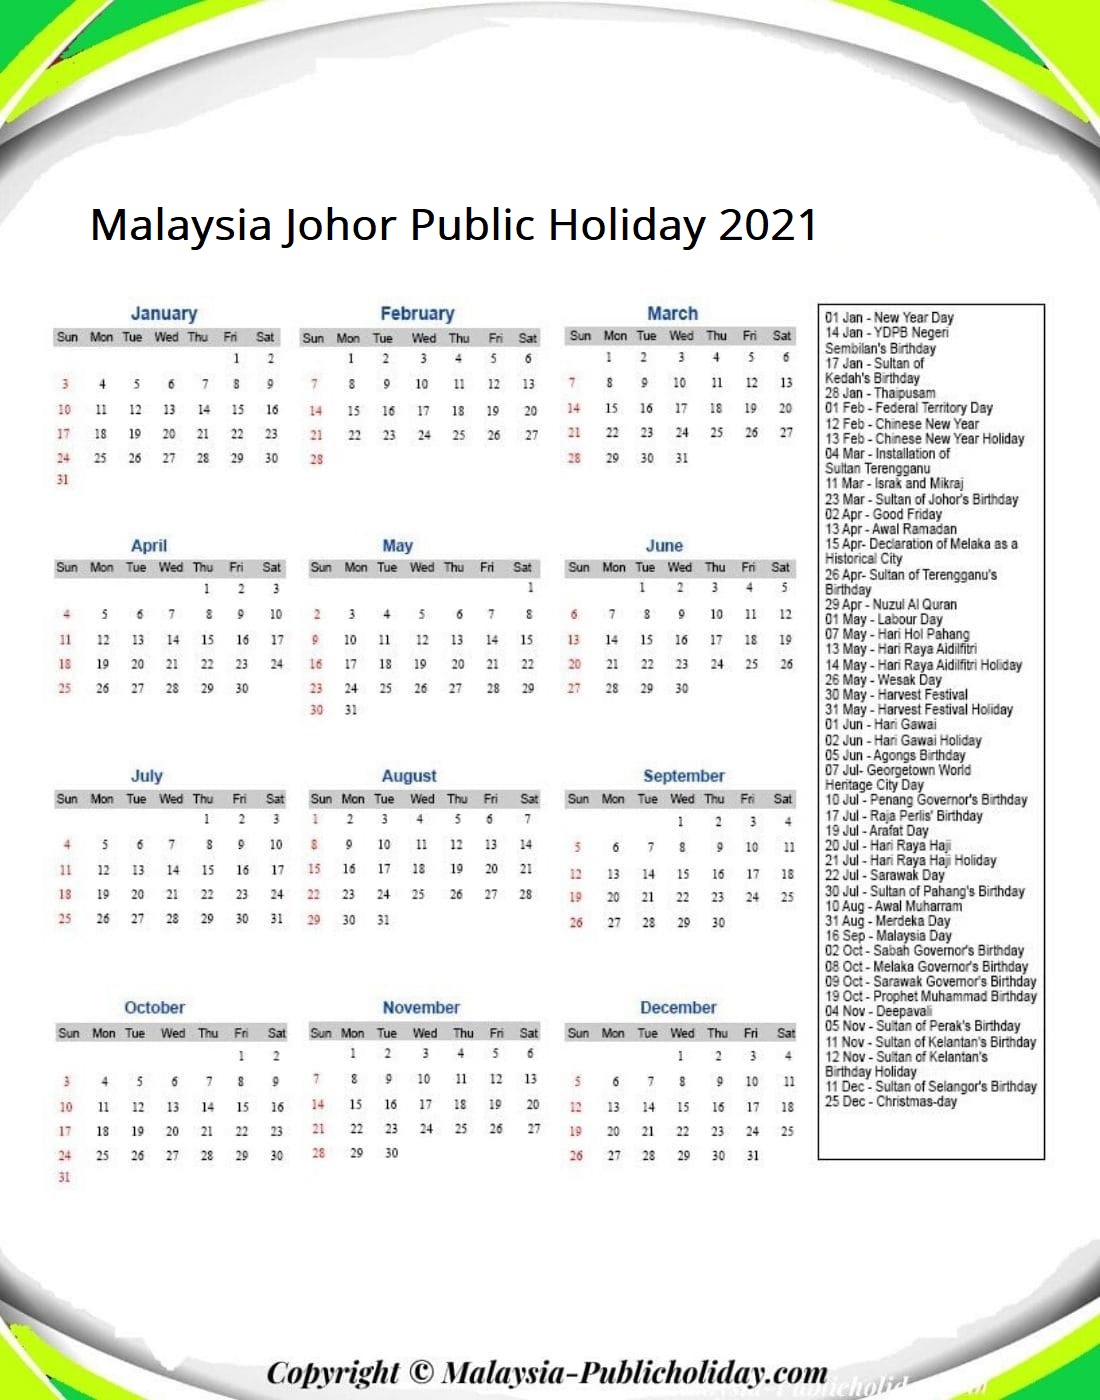 Johor bahru holiday 2021 public Nice stay,